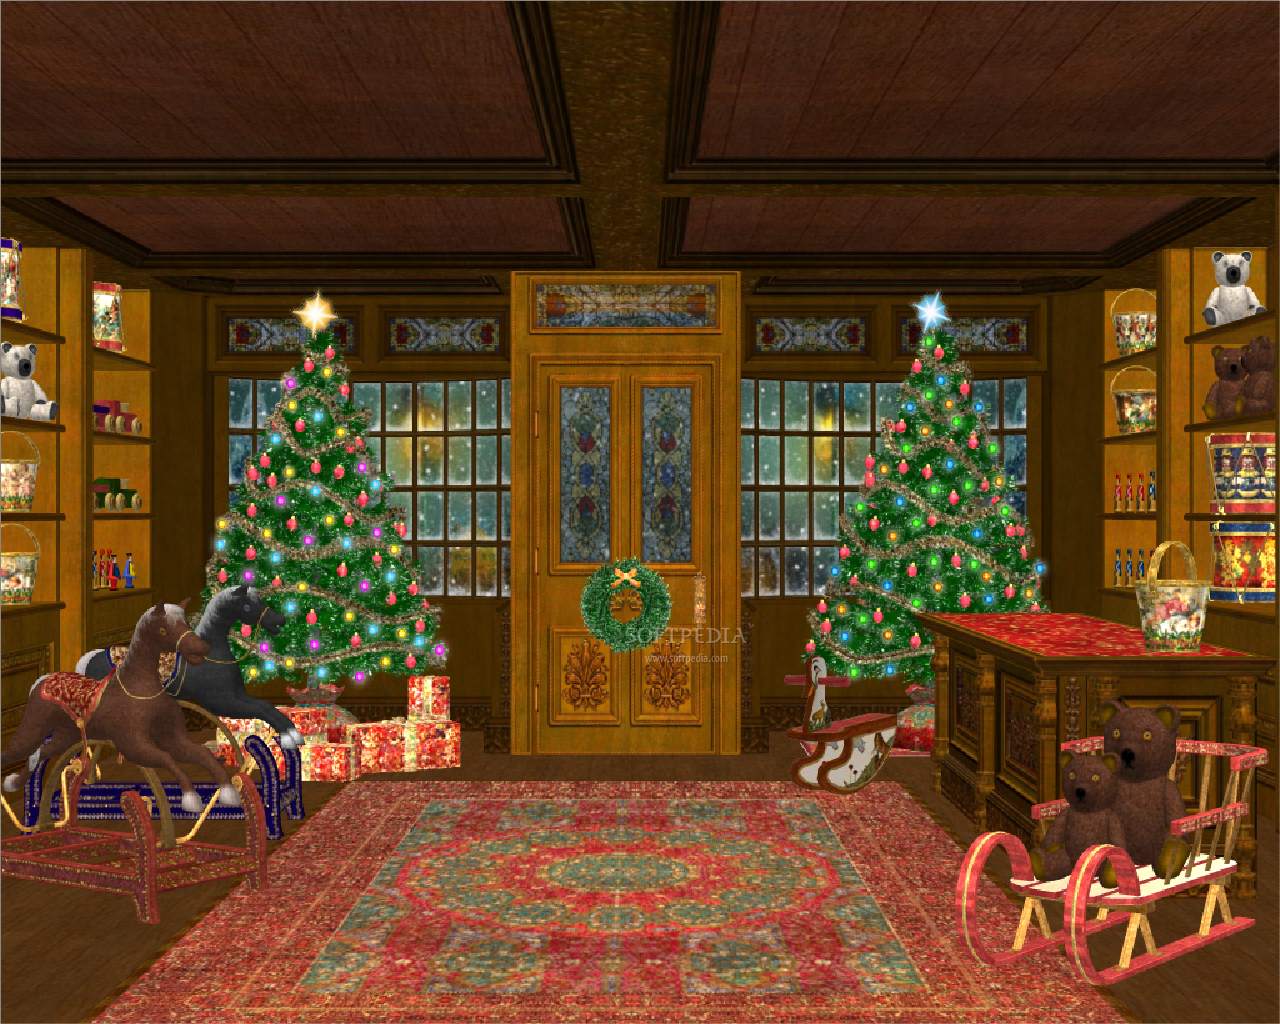 Screenshot 1 of Christmas Gift Shop - Animated Wallpaper